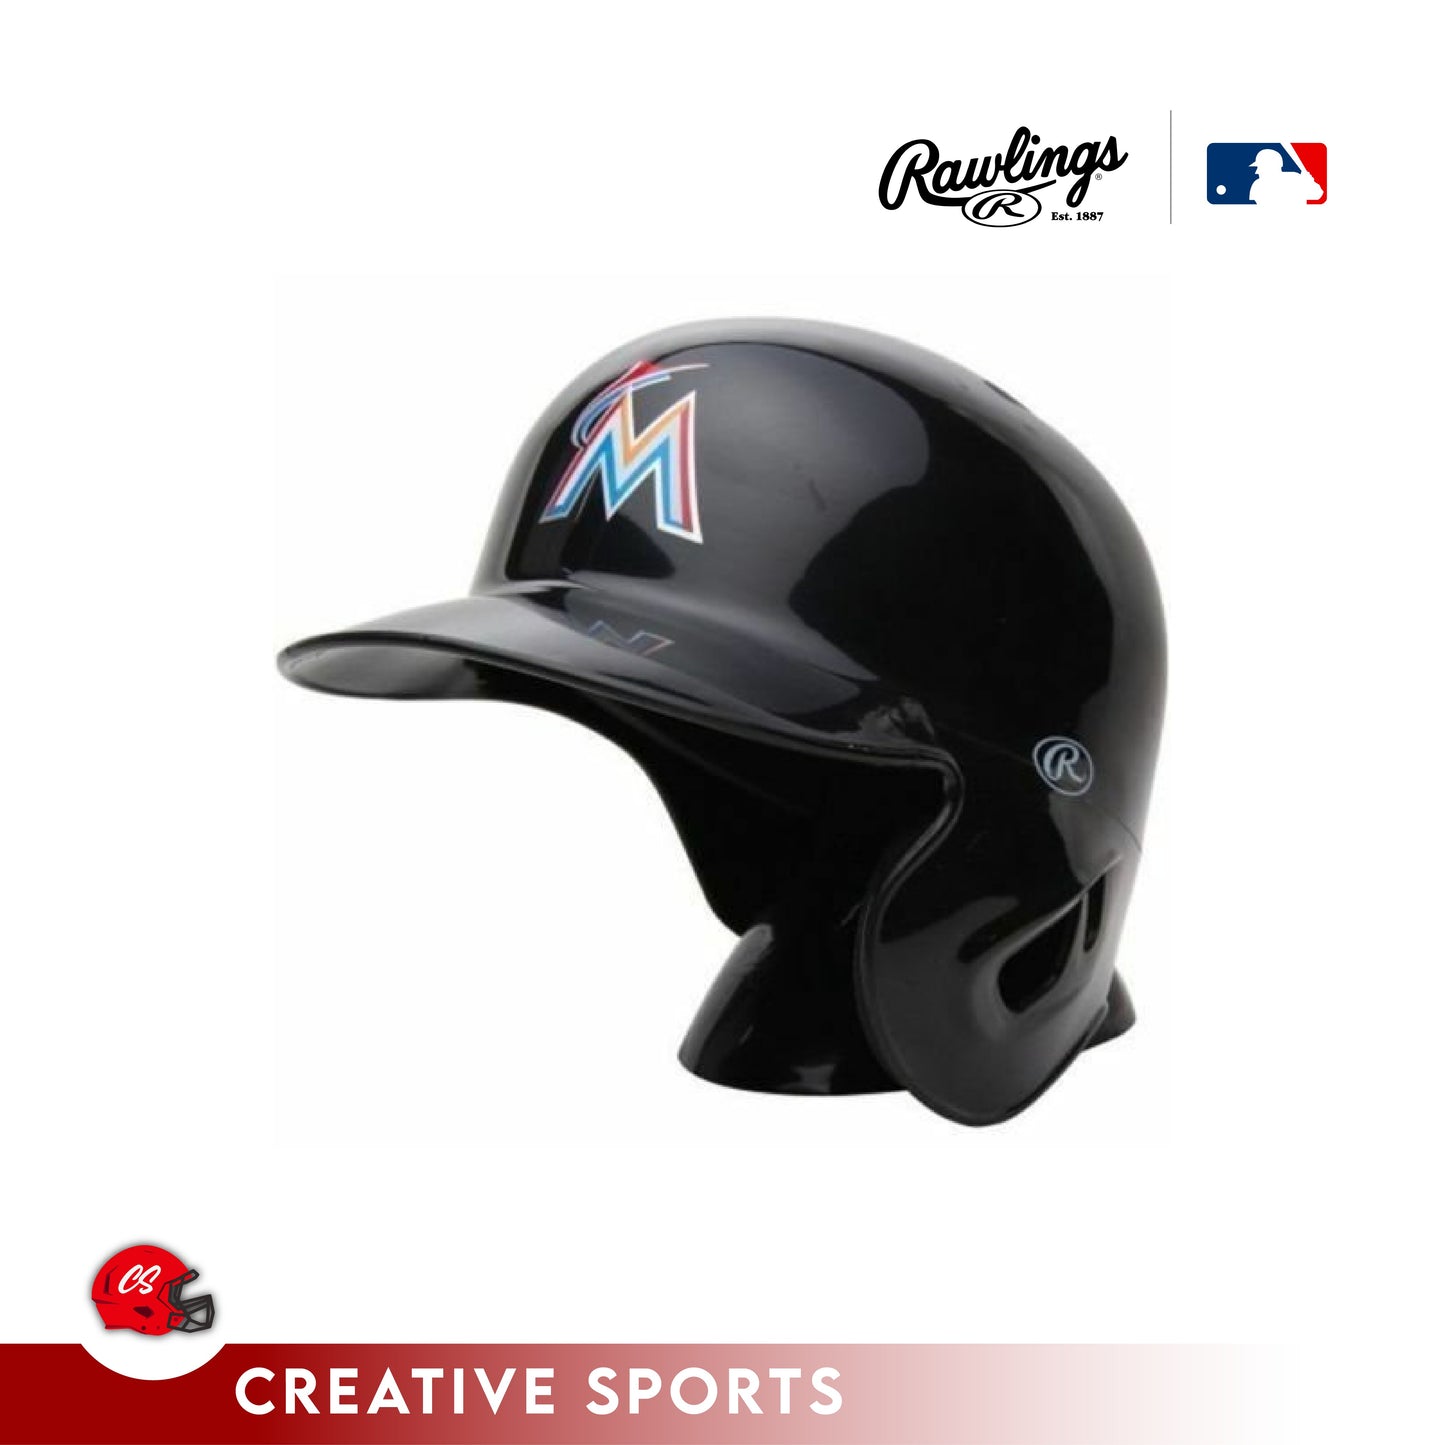  Full Size Baseball Batting Helmet Display Stand